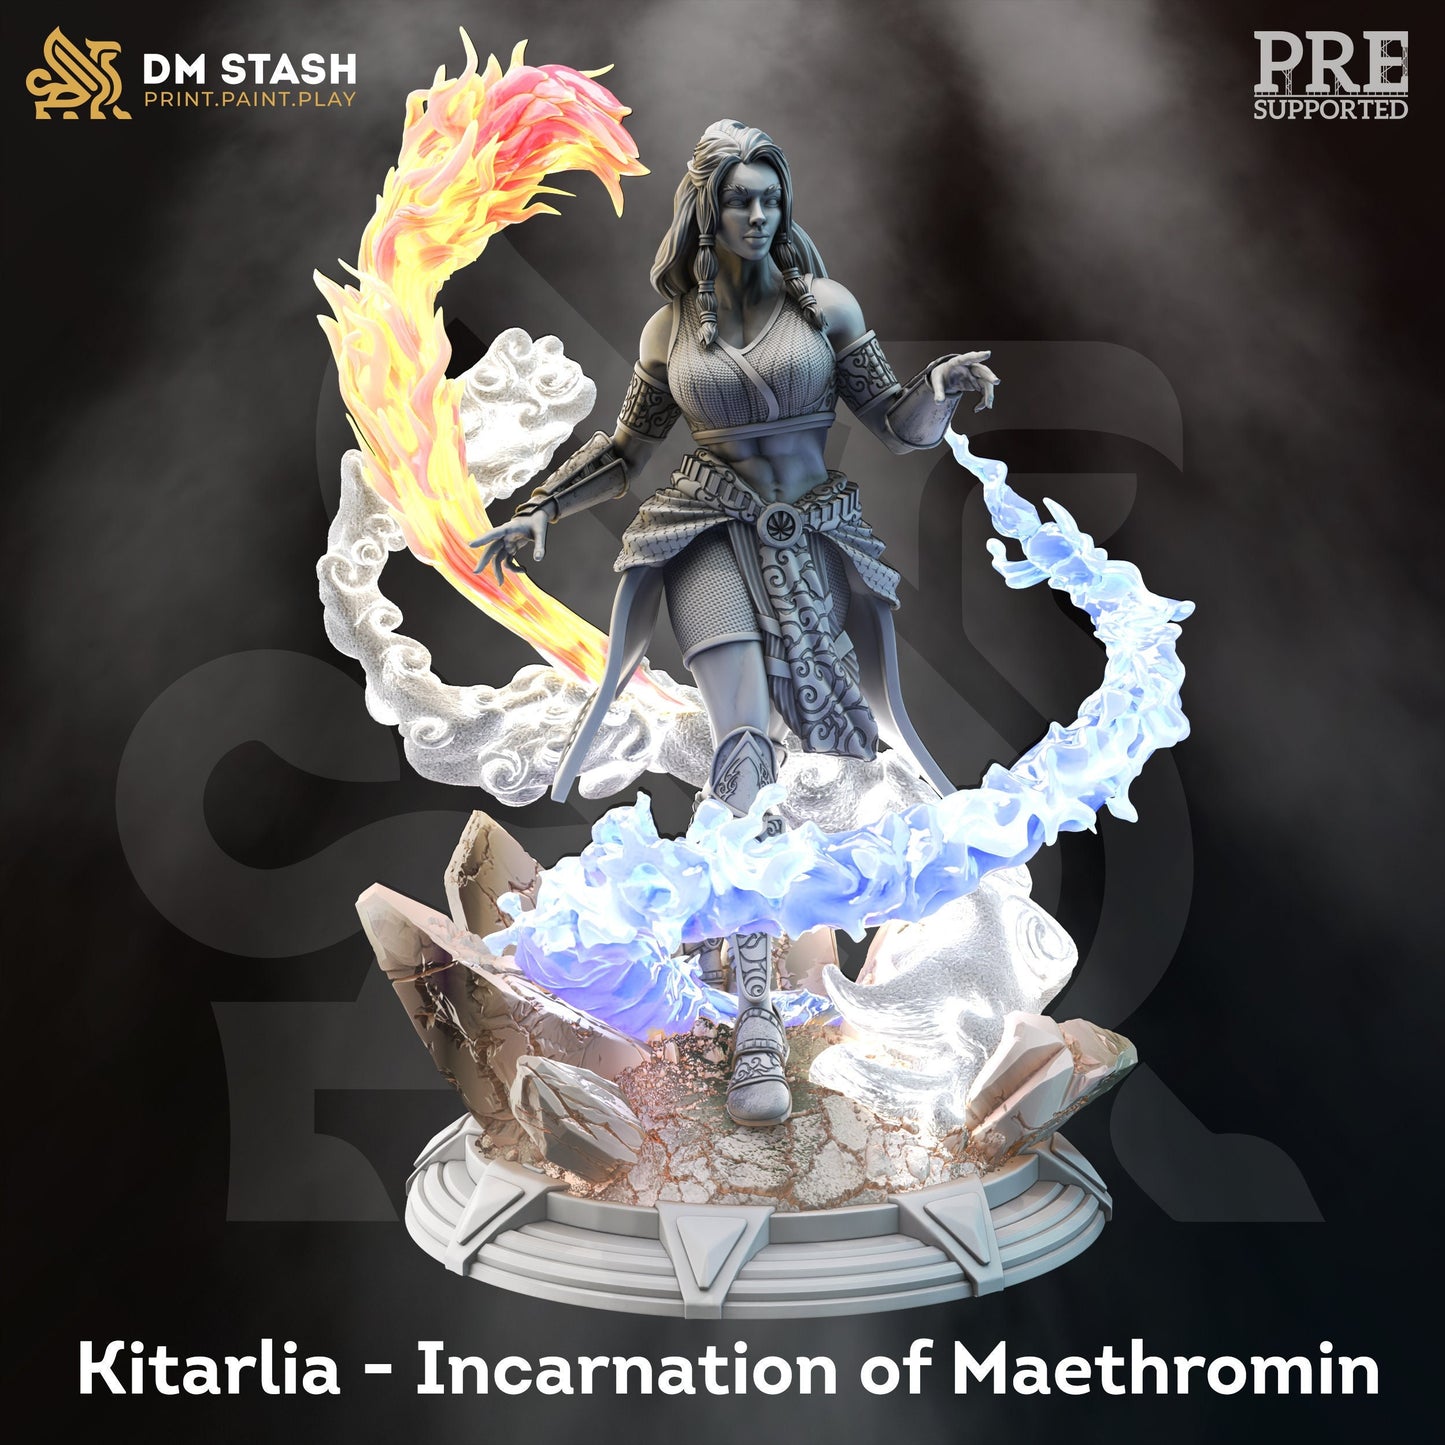 Kitarlia - Incarnation of Maethromin by DM Stash